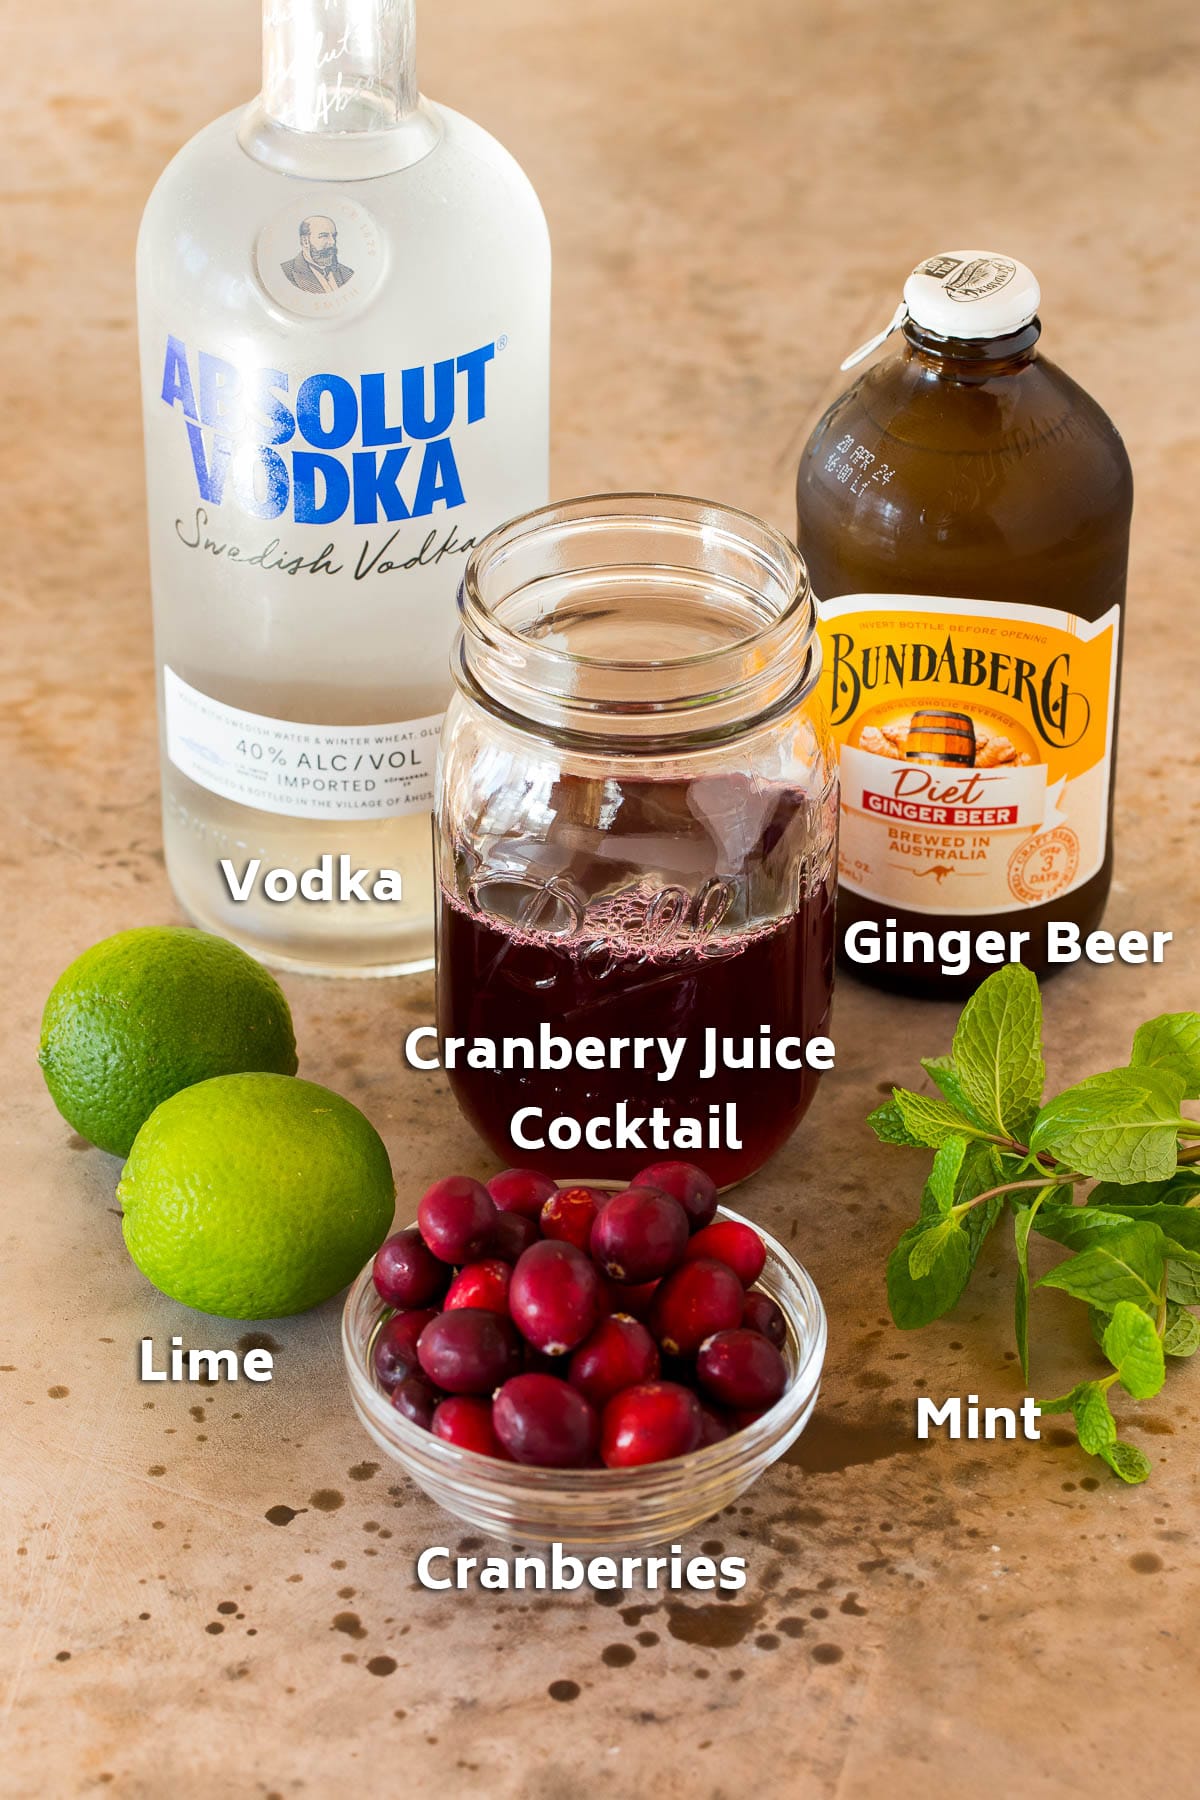 Ingredients including a bottle of vodka, ginger beer and cranberry juice.